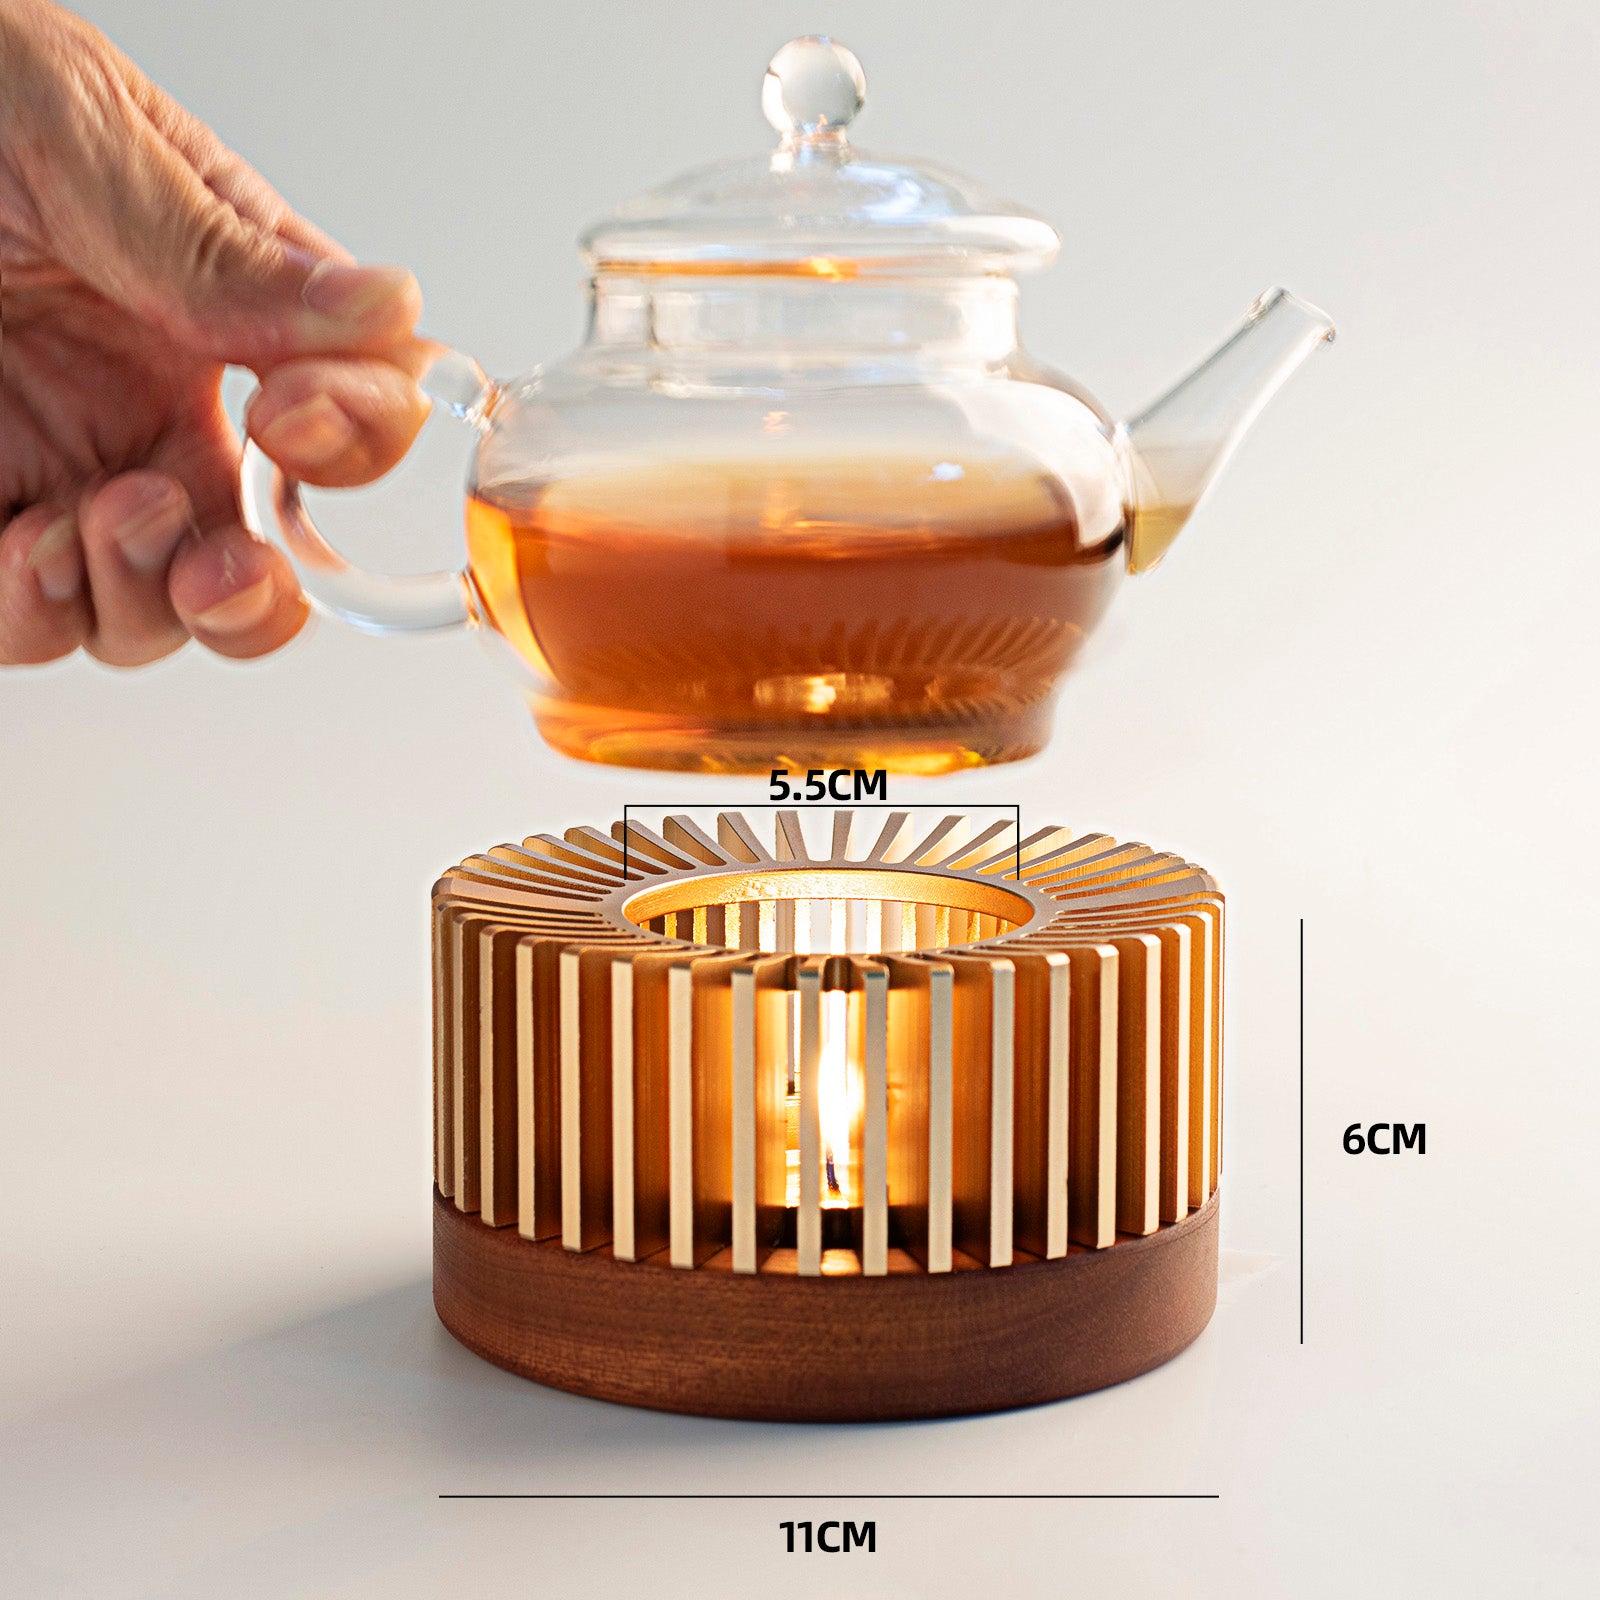 5 Best Teapot Warmers Of 2021 - Foods Guy